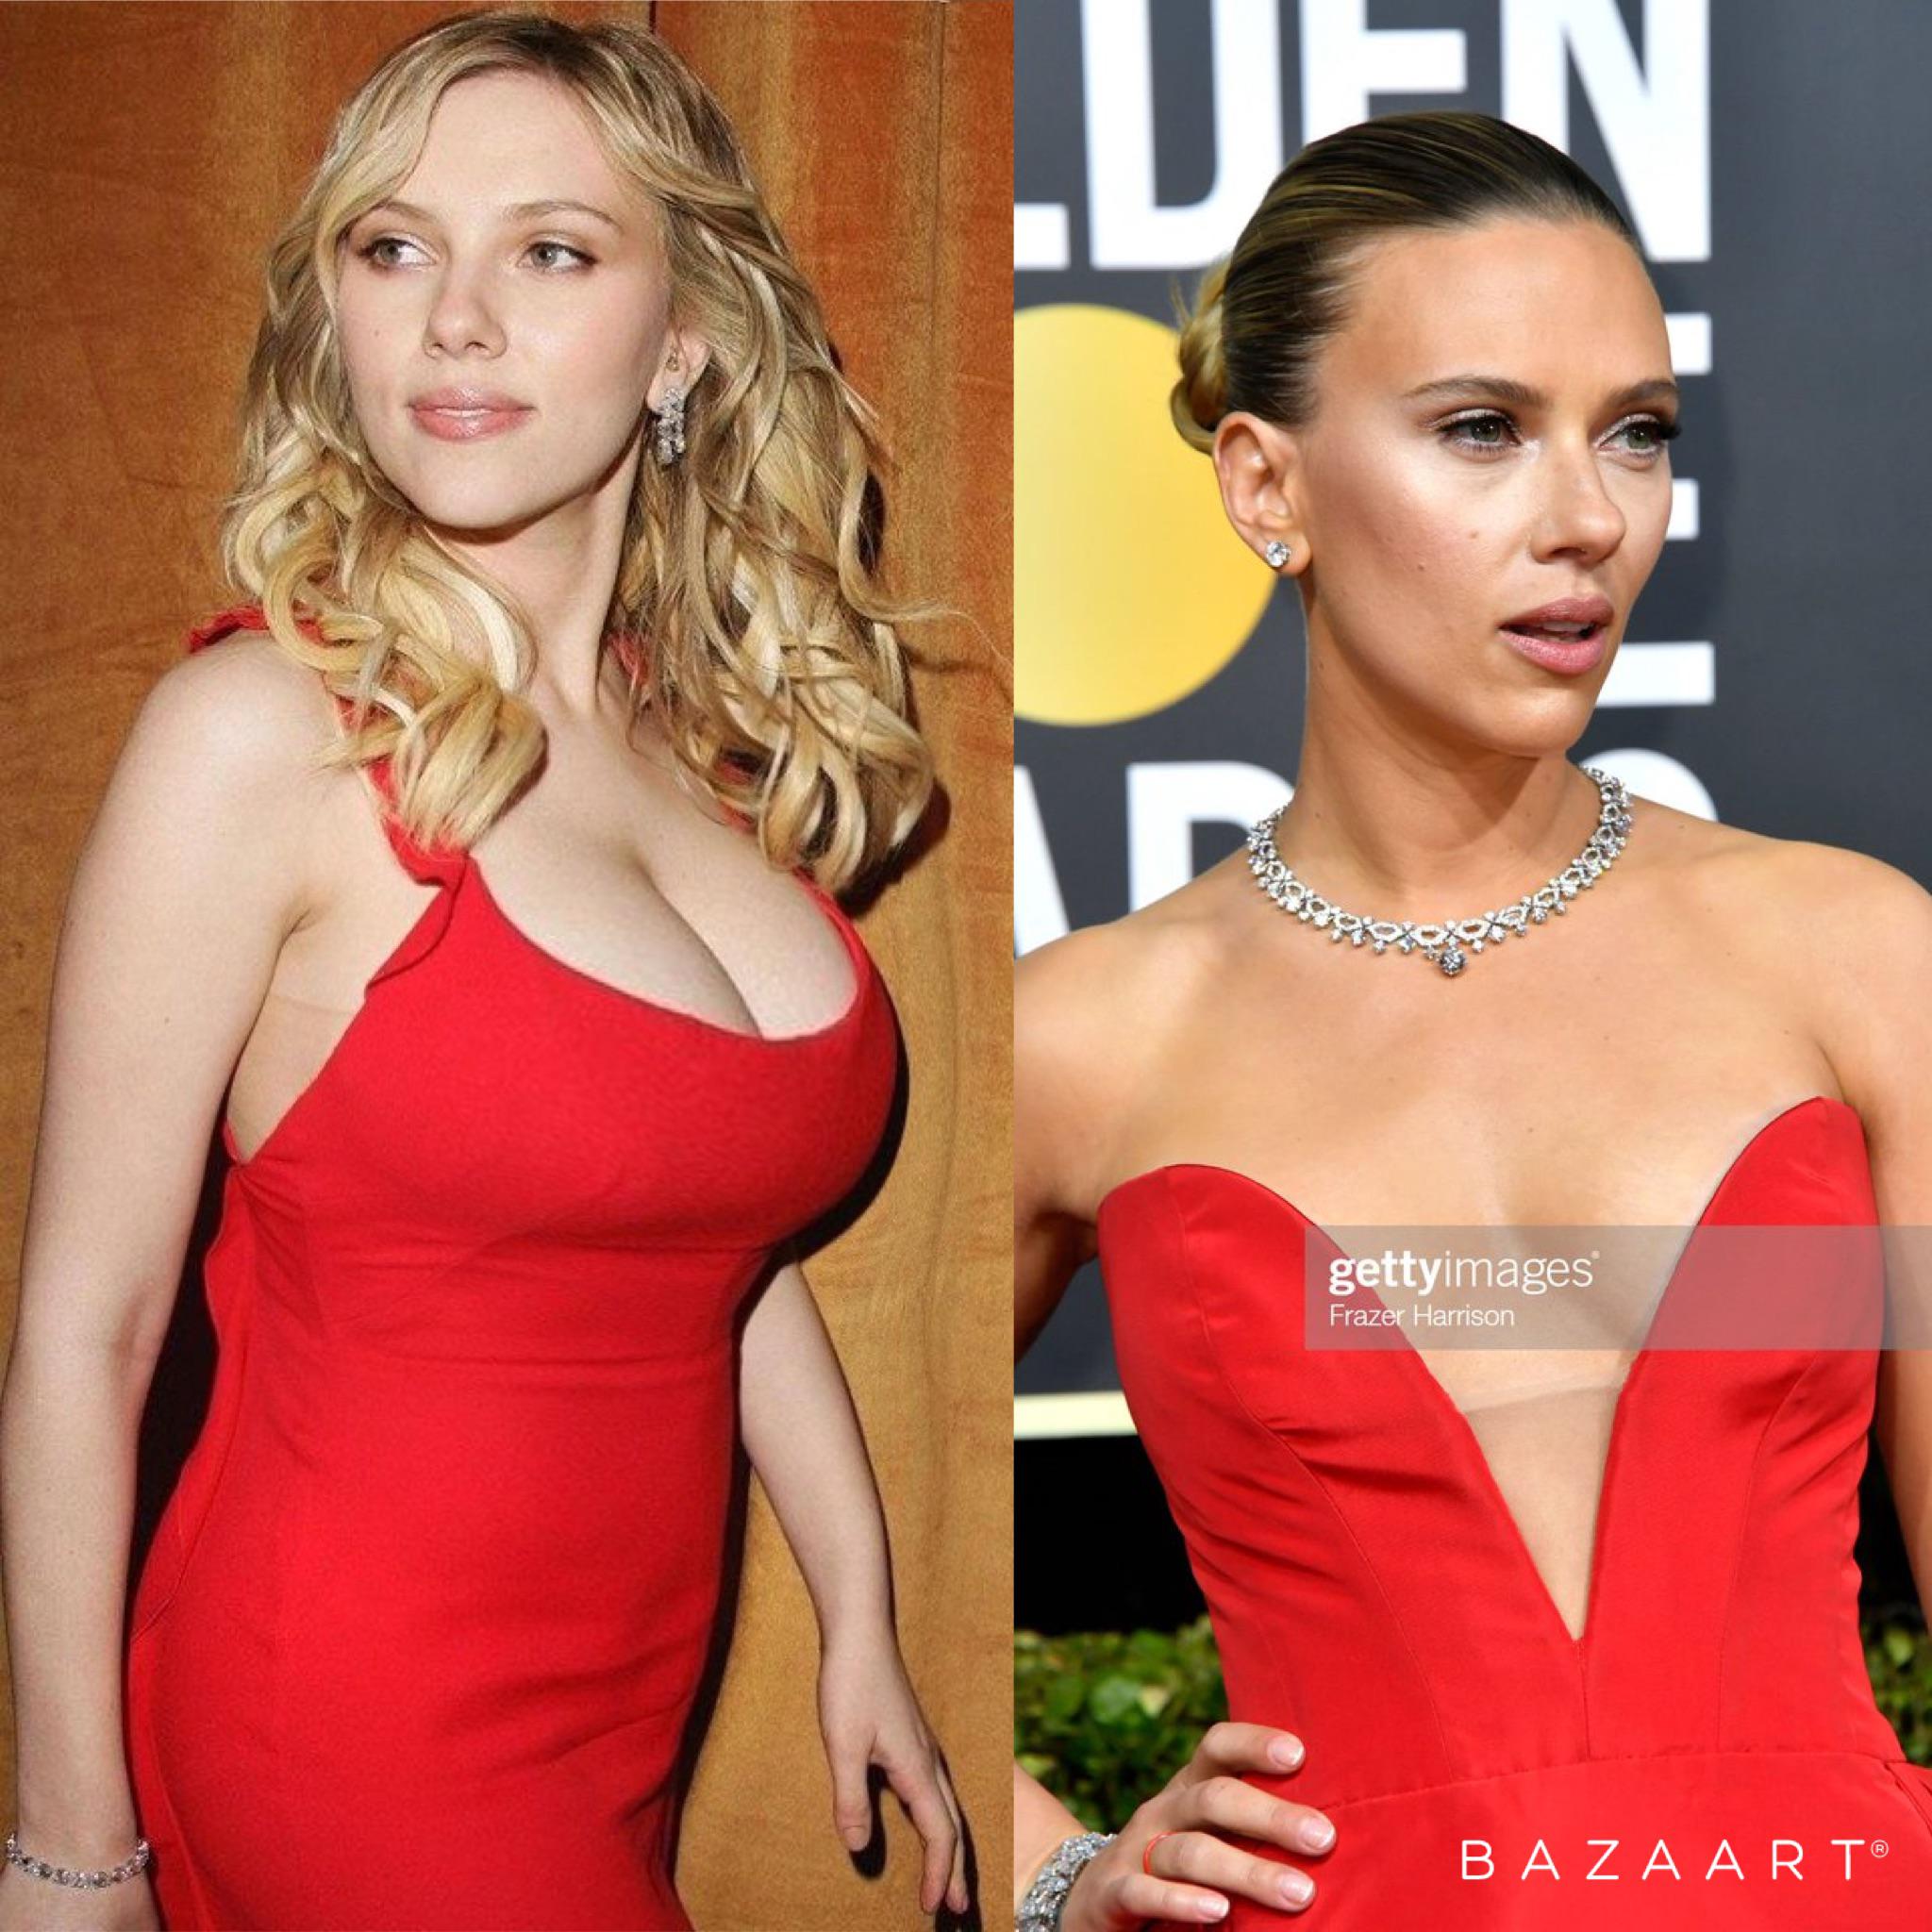 Scarlett Johansson - Do you guys prefer bigger or skinny? 161